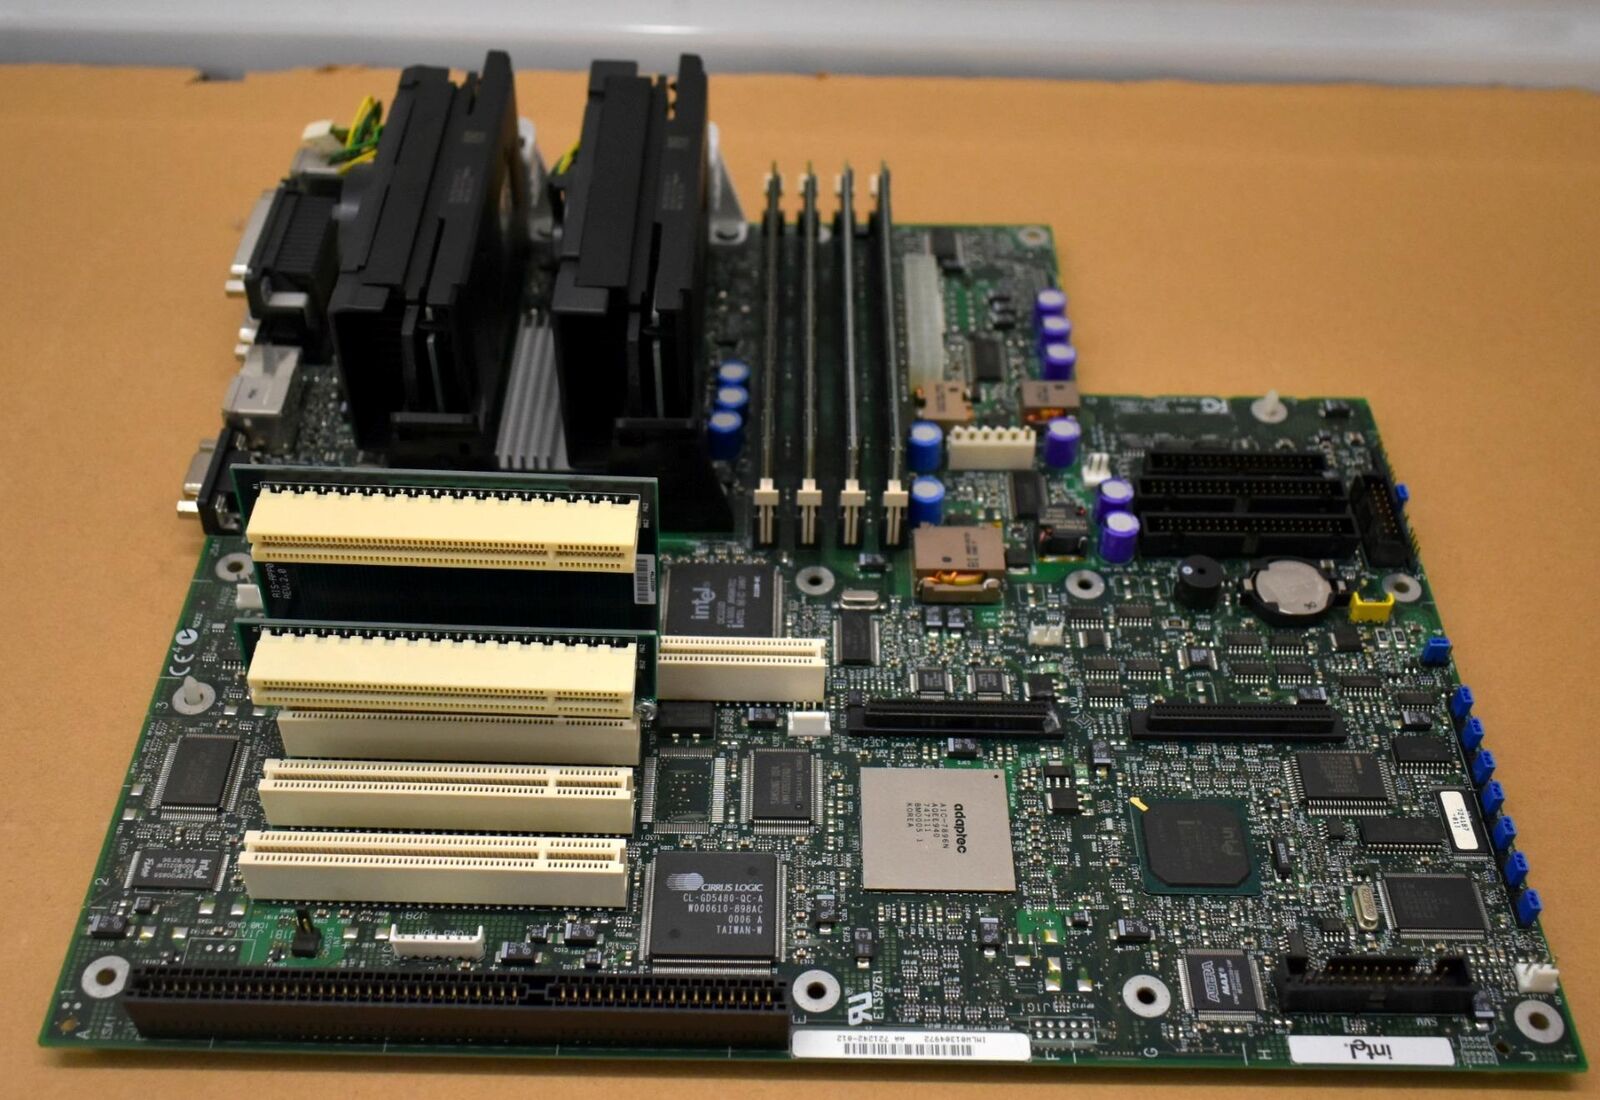 Intel L440GX Server Motherboard With Dual Petium III 500MHz , 1GB RAM